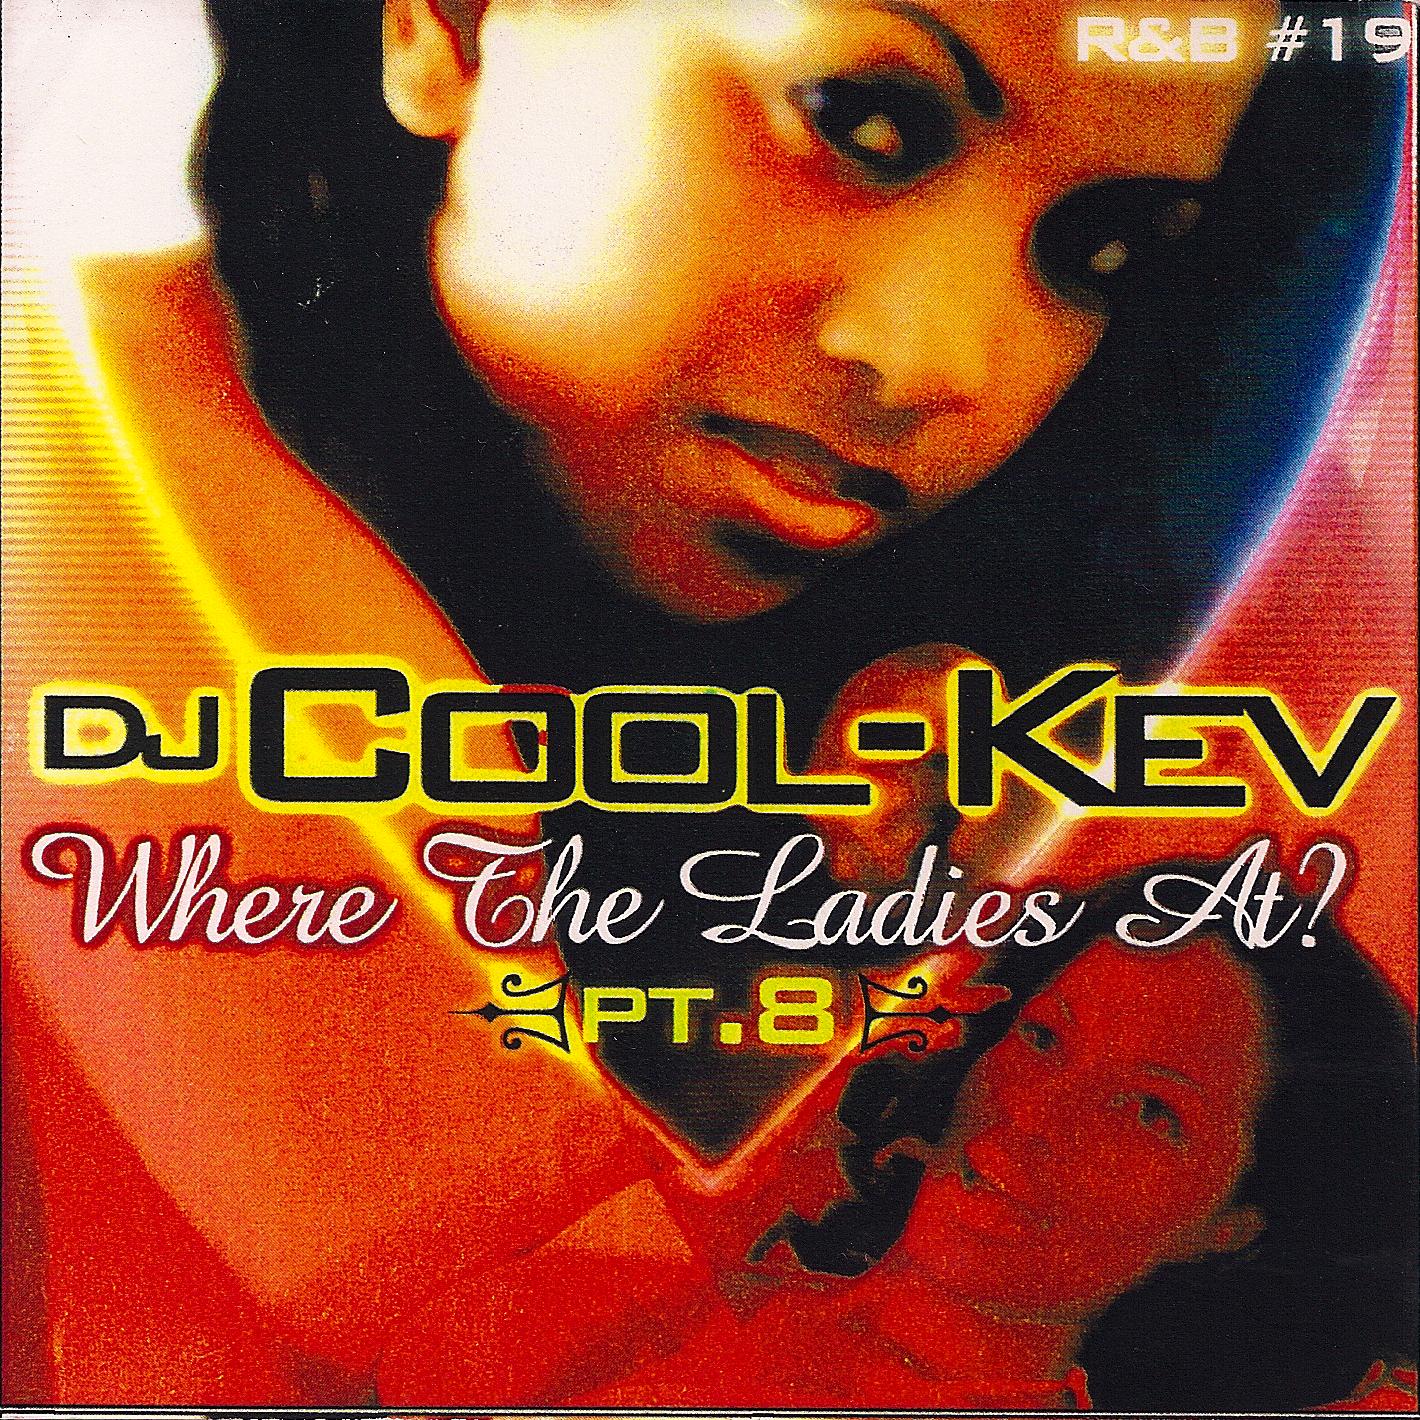 DJ Cool Kev – R&B 19, R&B, RNB, Throwback R&B, Mixtape Downloads, Downloads